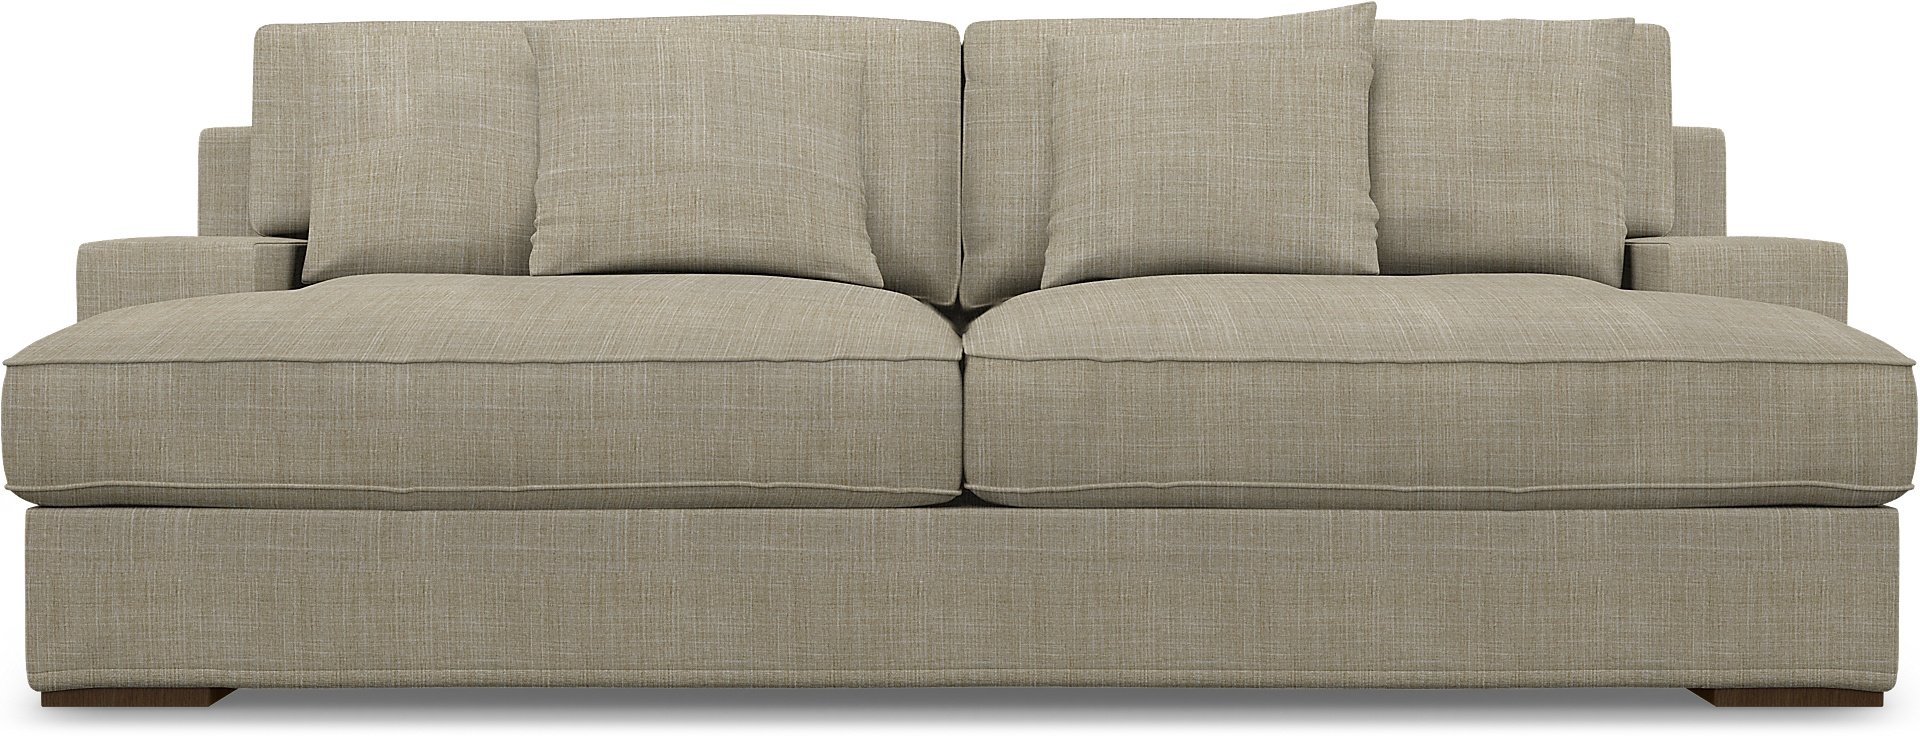 IKEA - Goteborg 3 Seater Sofa Cover, Sand Beige, Boucle & Texture - Bemz